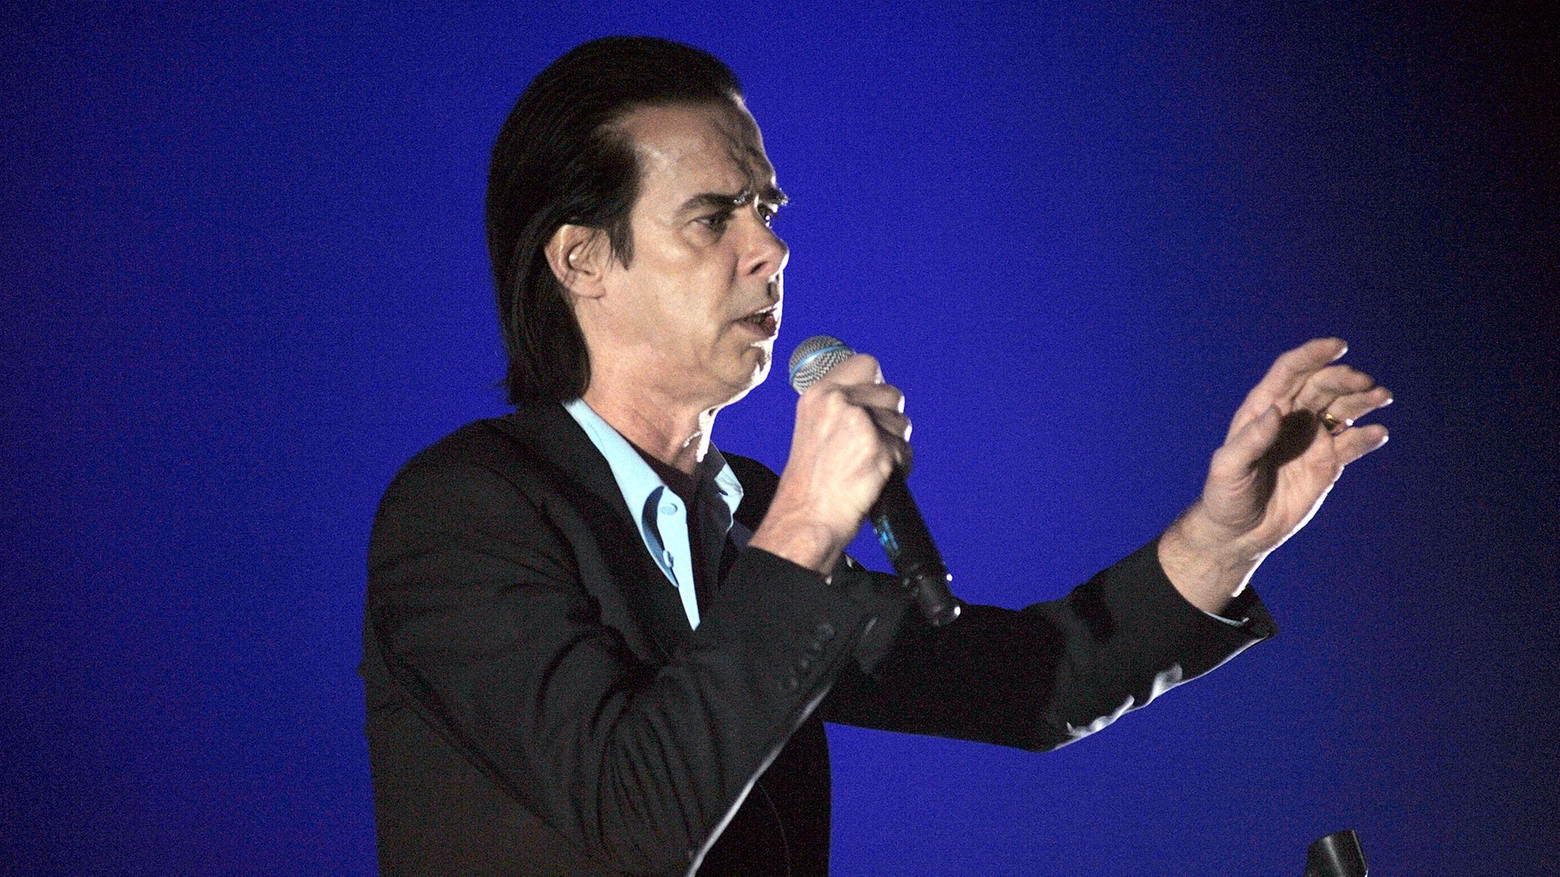 Nick Cave in concerto a Milano